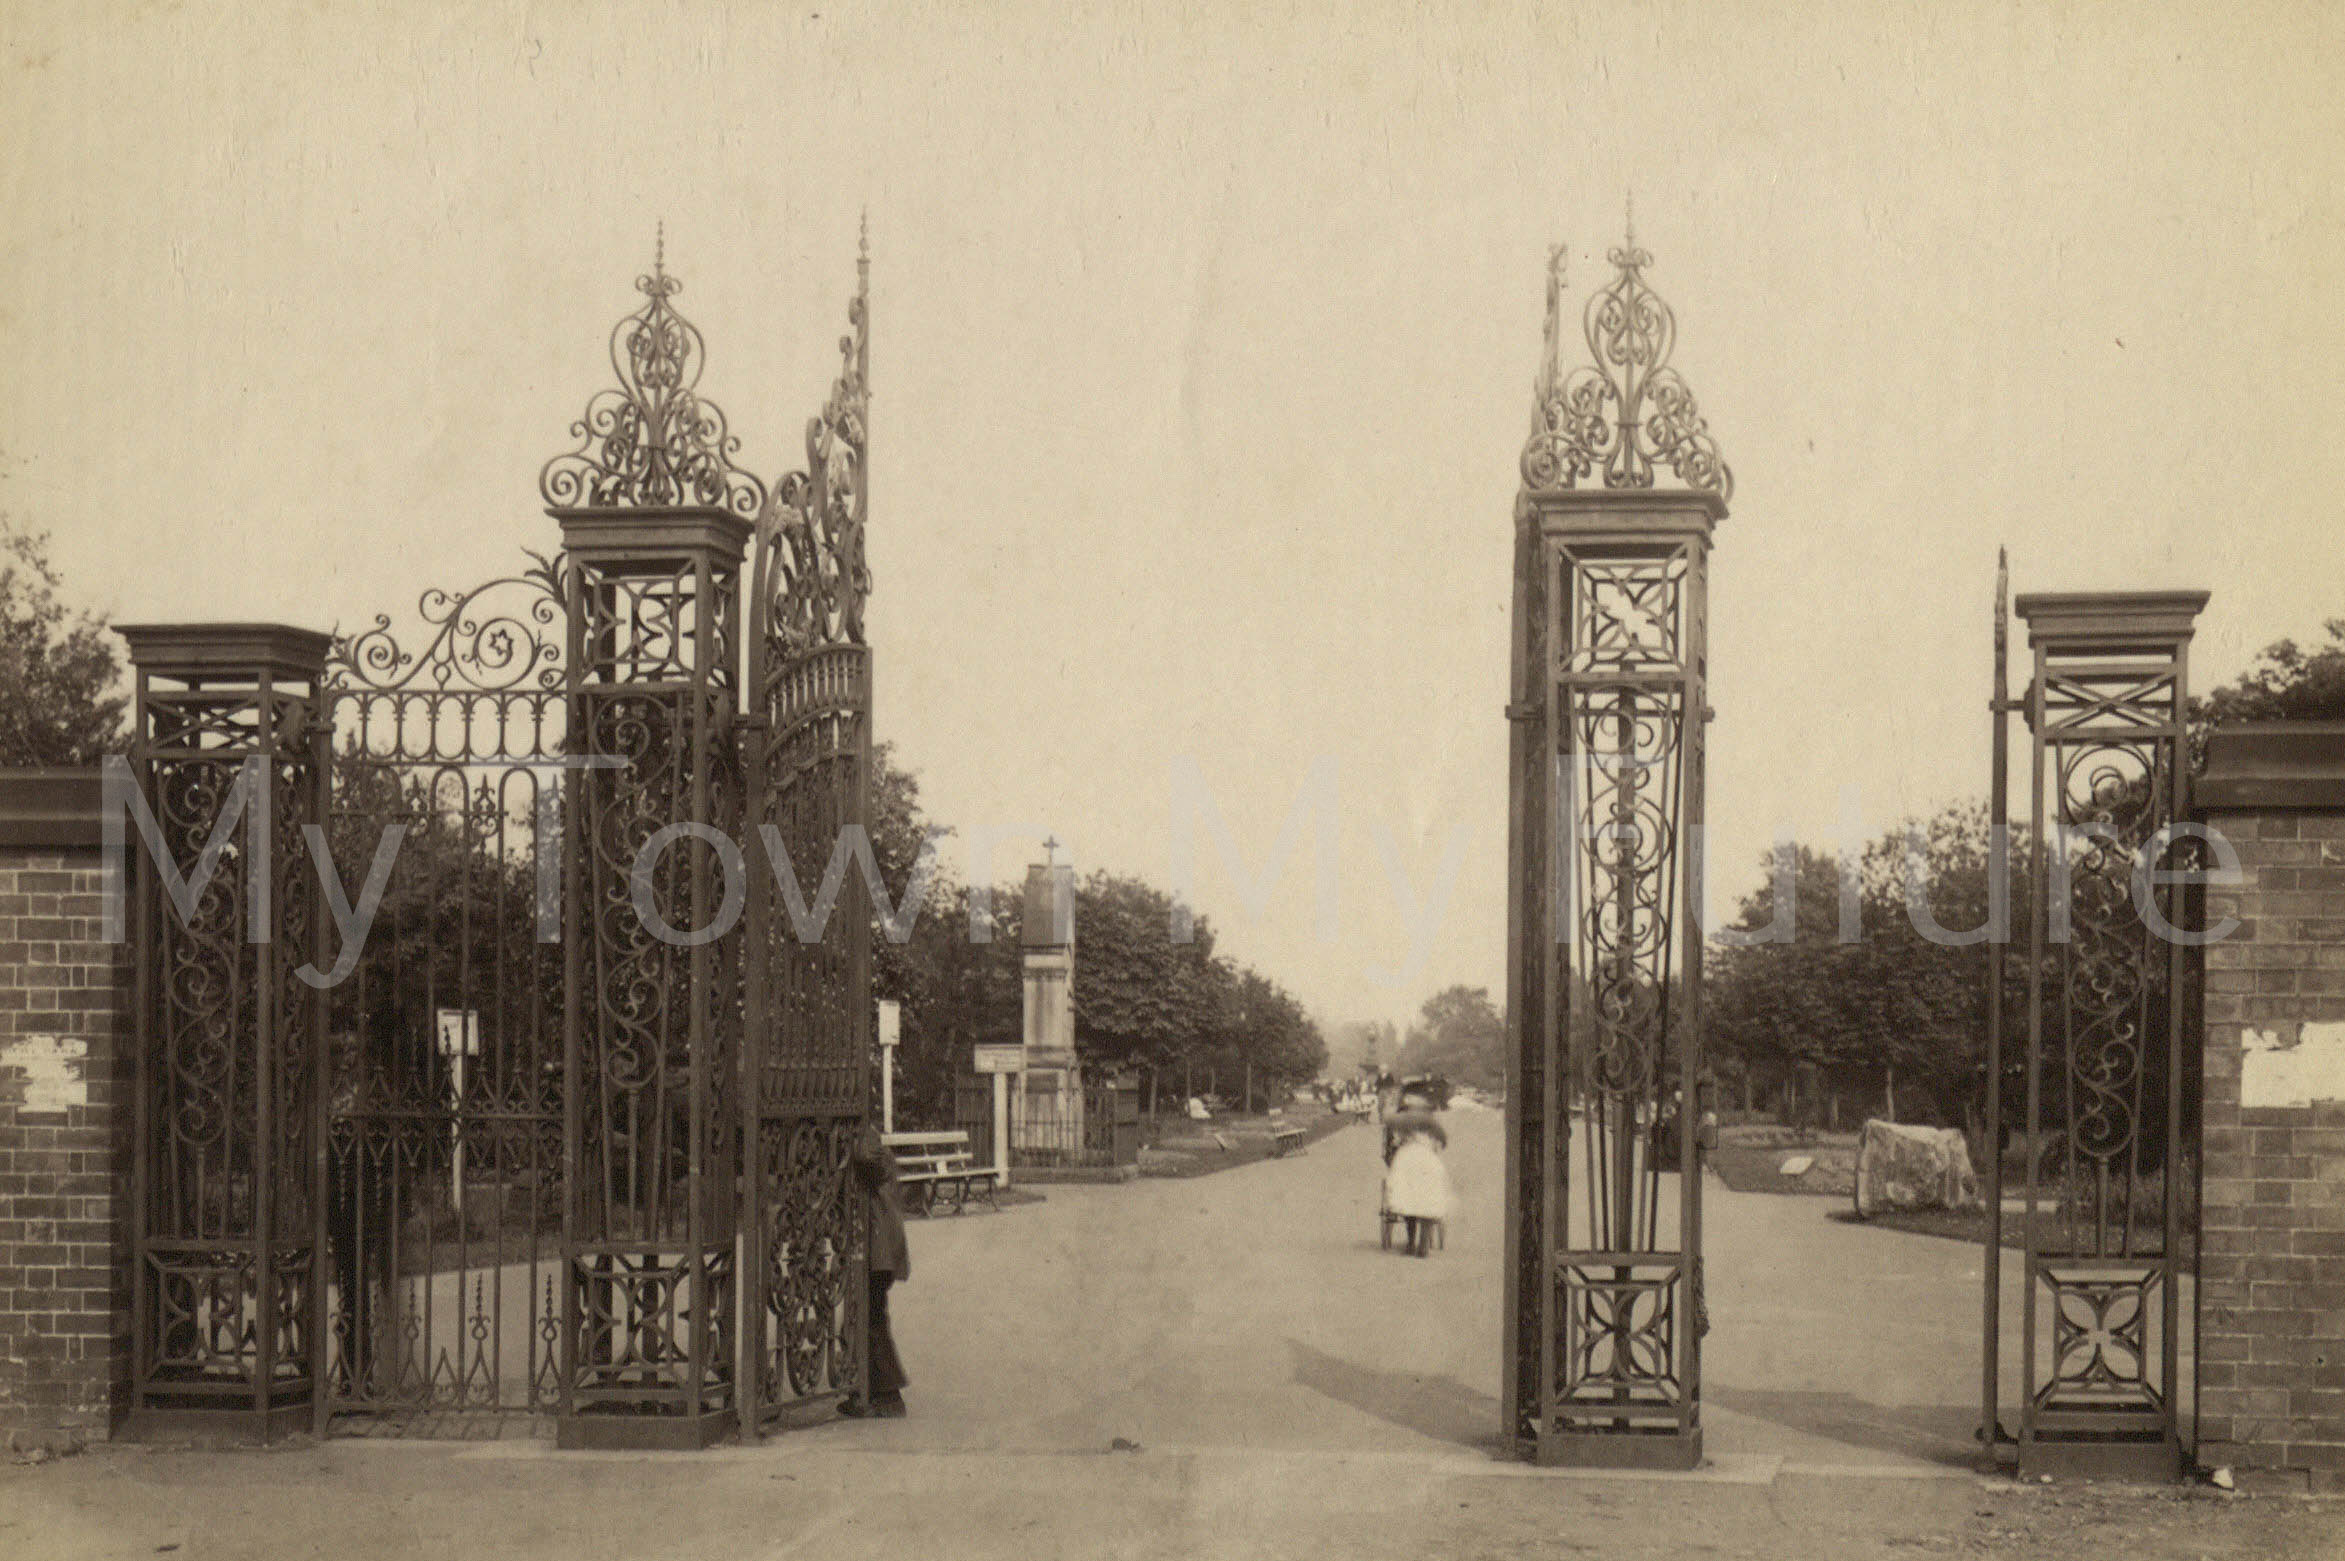 Albert Park - The Gates